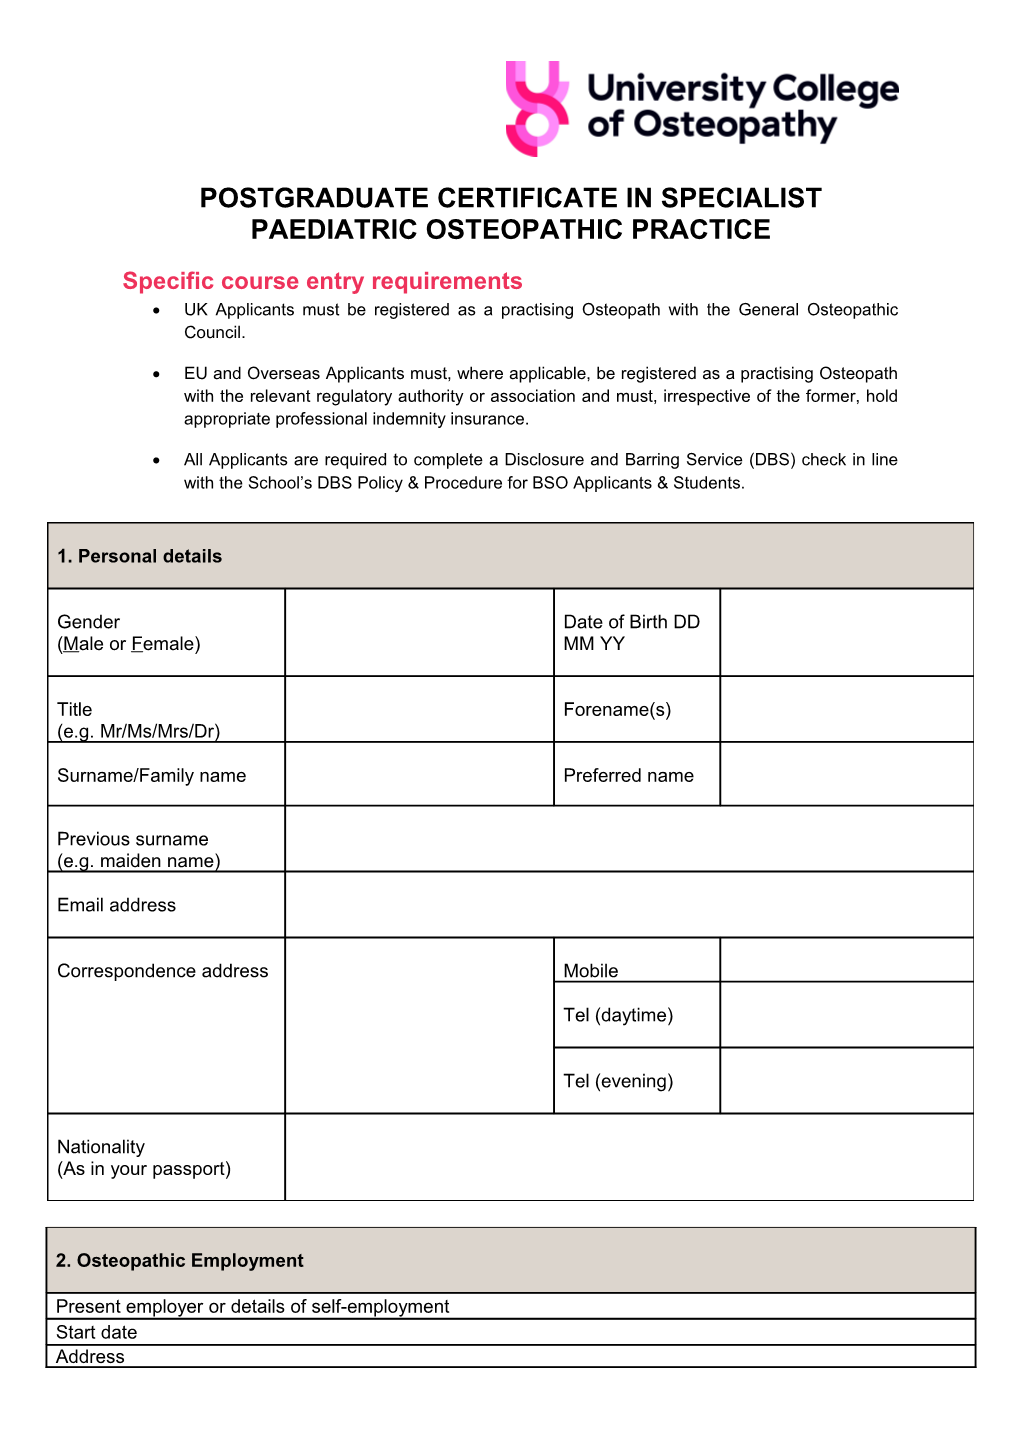 Postgraduate Certificate in Specialist Paediatric Osteopathic Practice